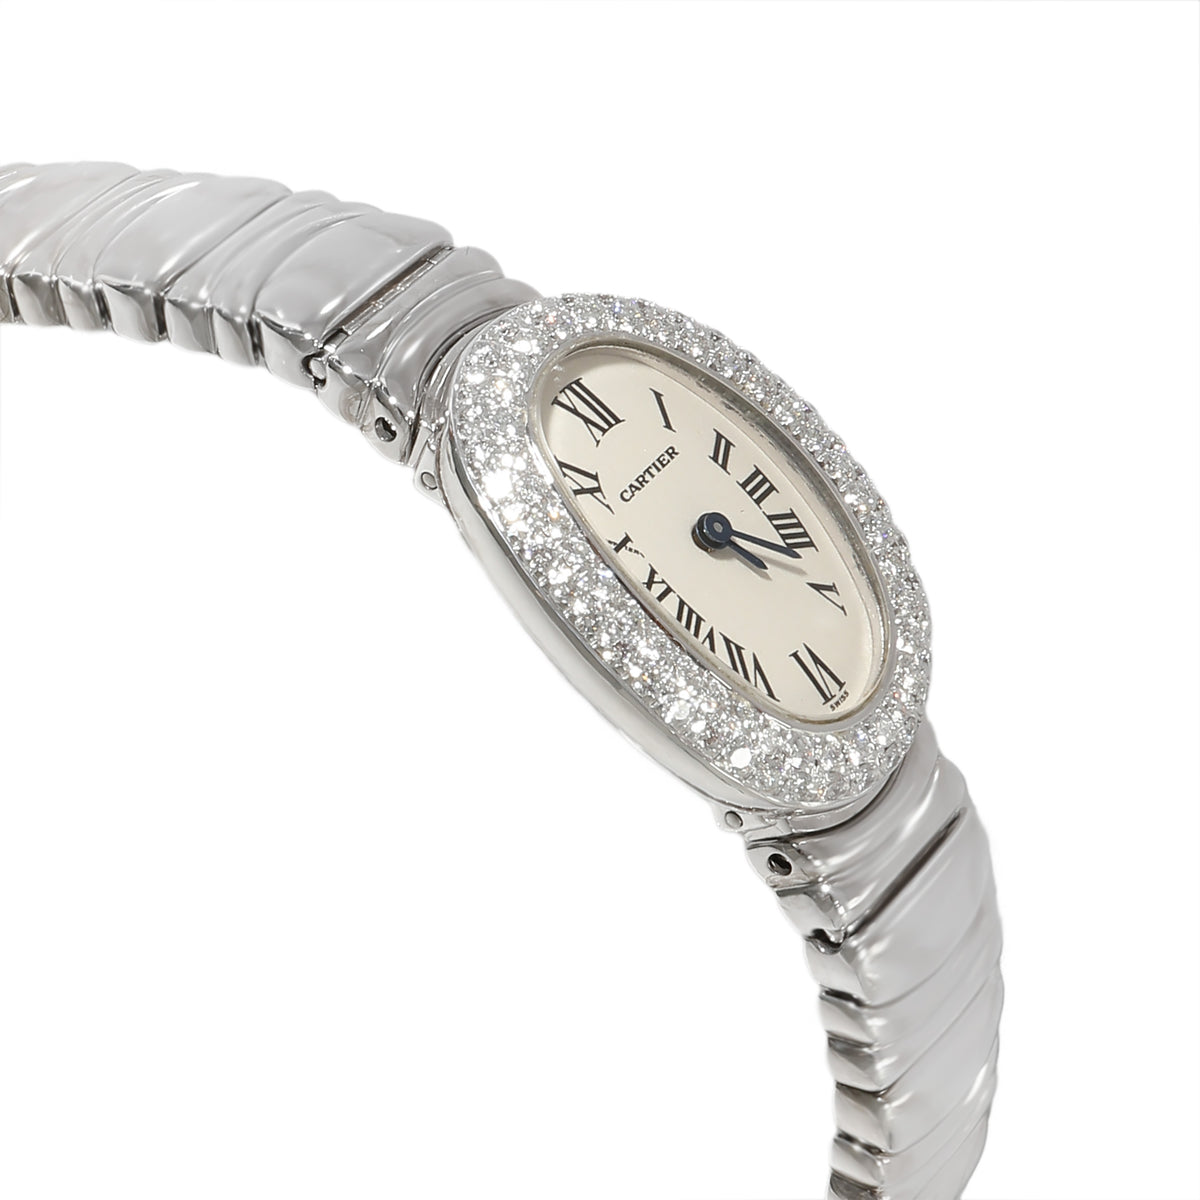 Baignoire WB5095L2 Women's Watch in 18kt White Gold